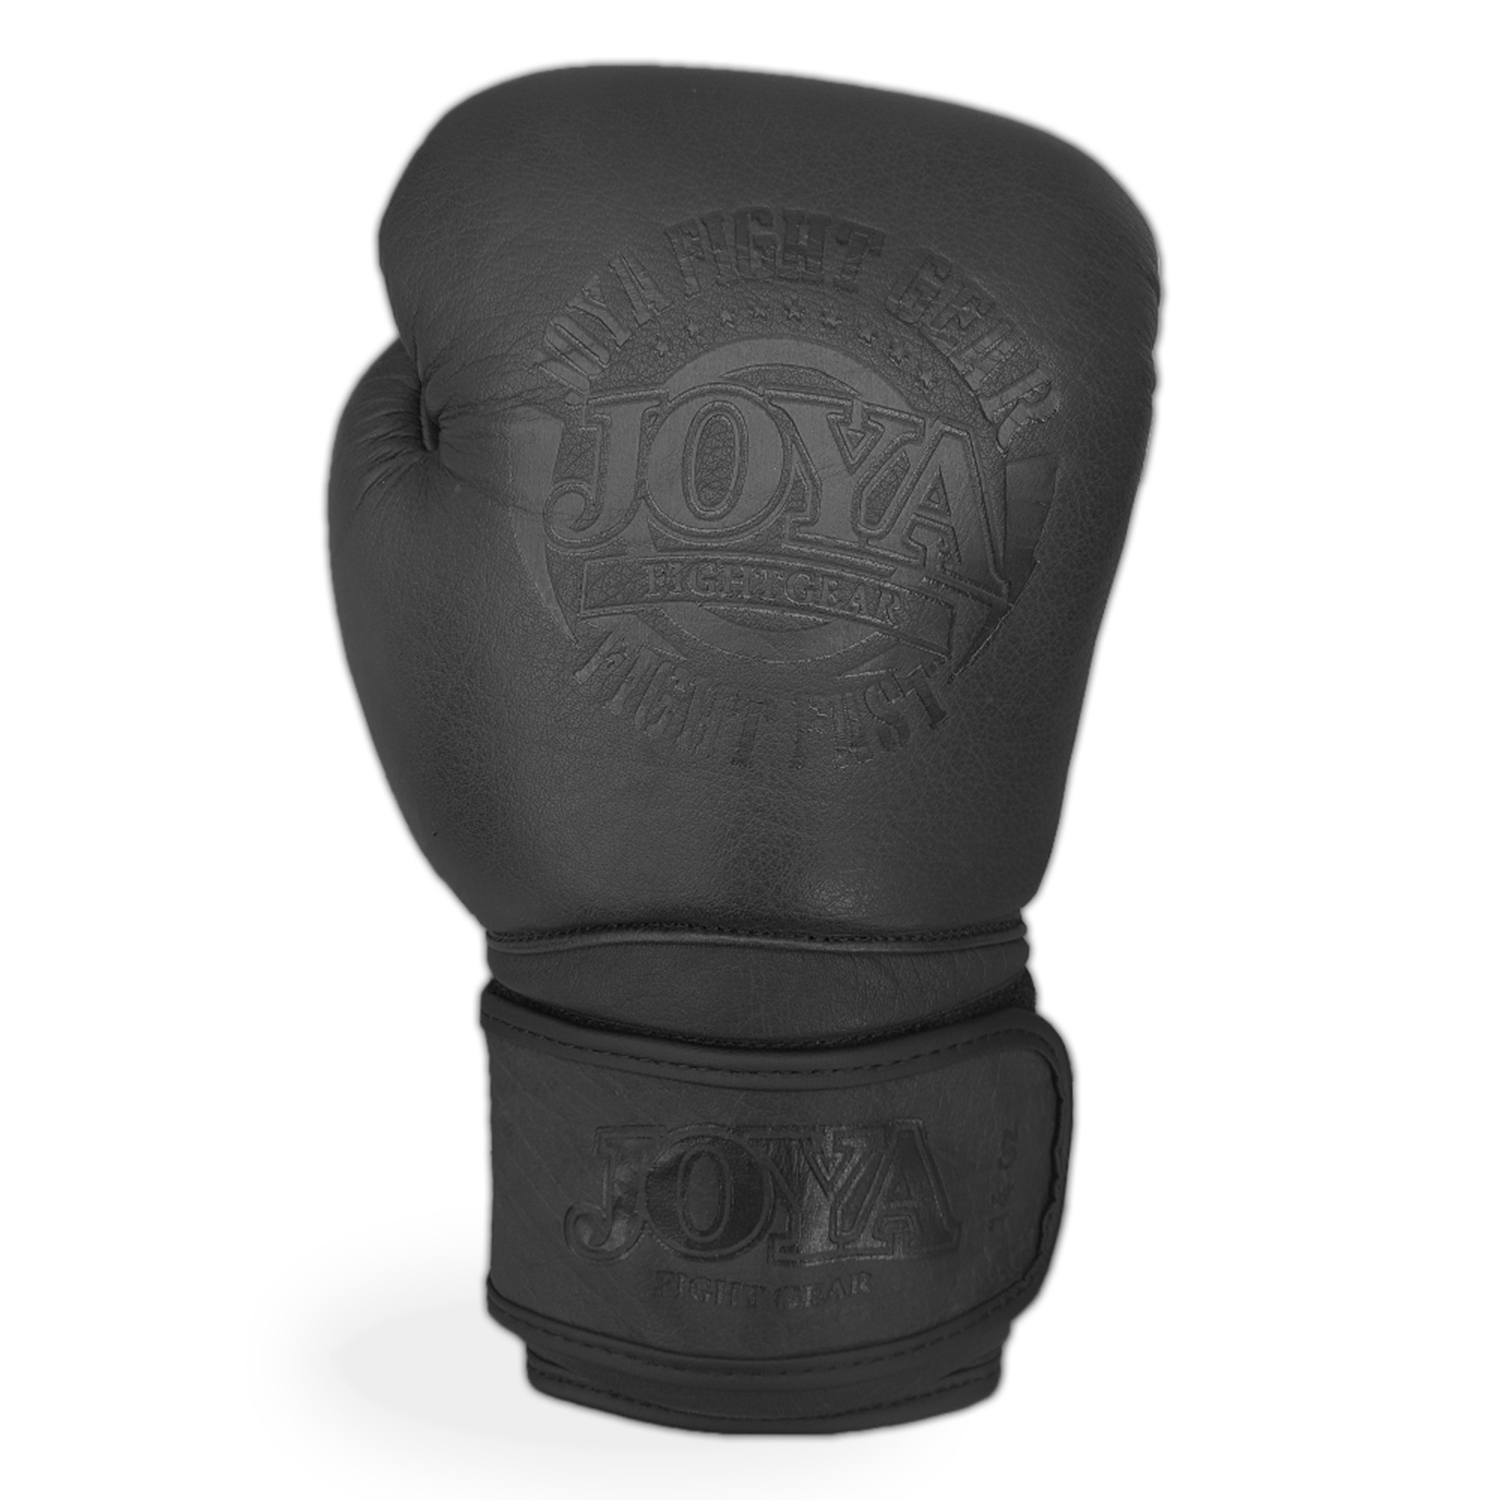 Joya Fight Fast boxing gloves black 12 oz